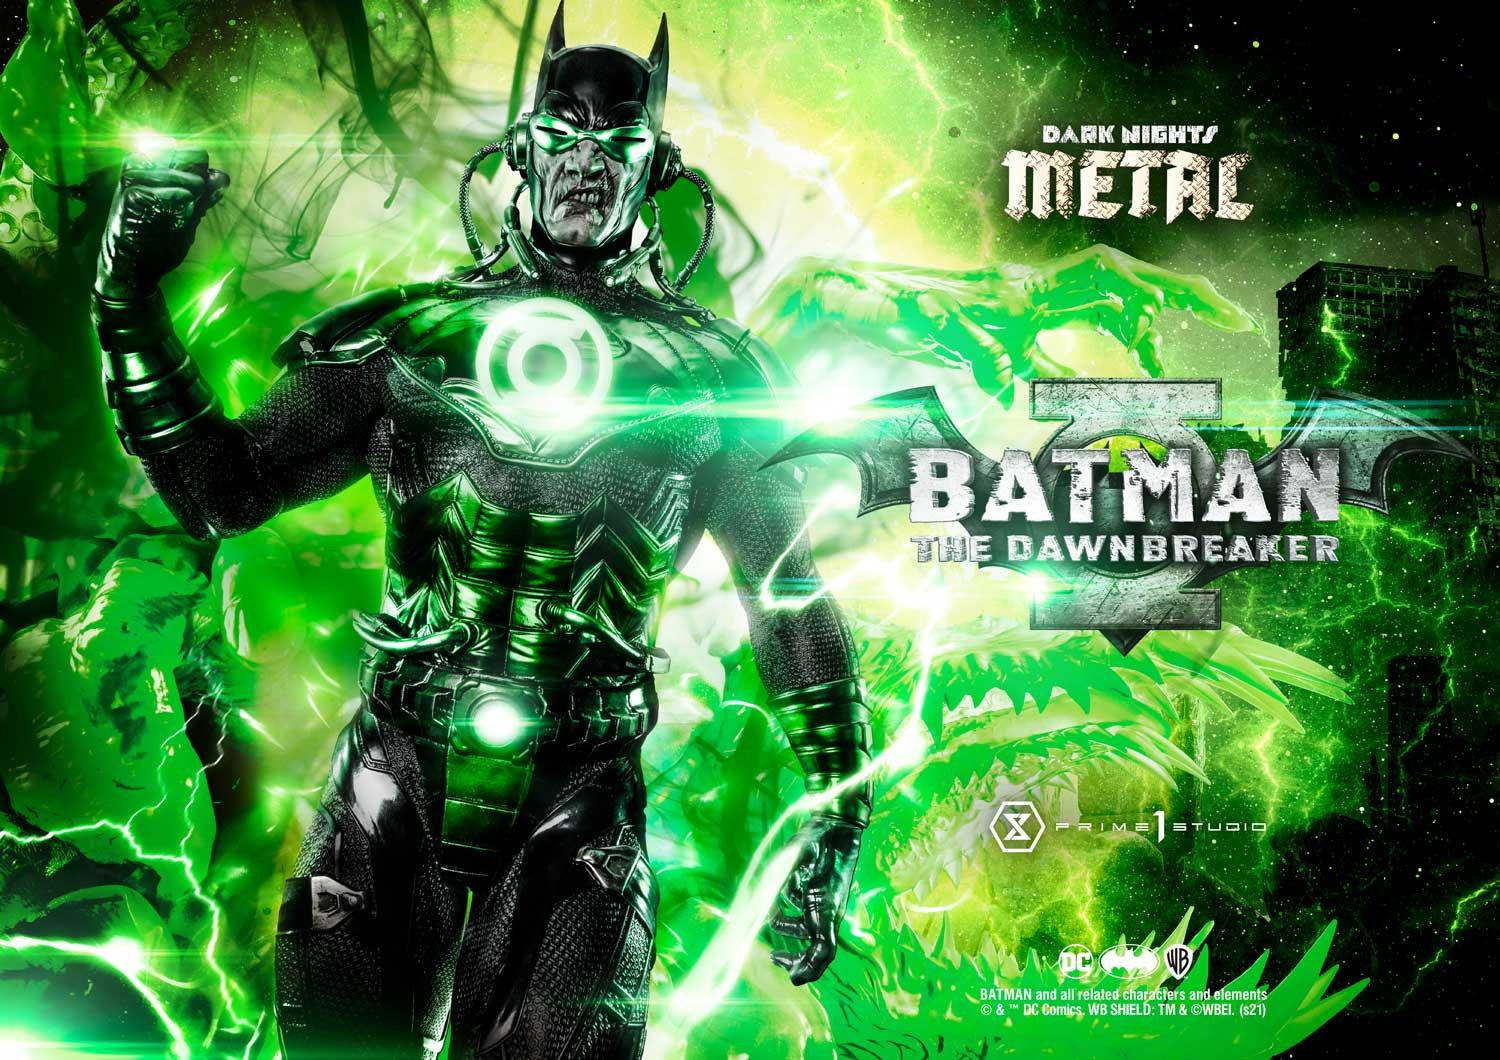 Metal Vehicle Bat-Raptor 30 cm Batman Licensed Merch - films, games 